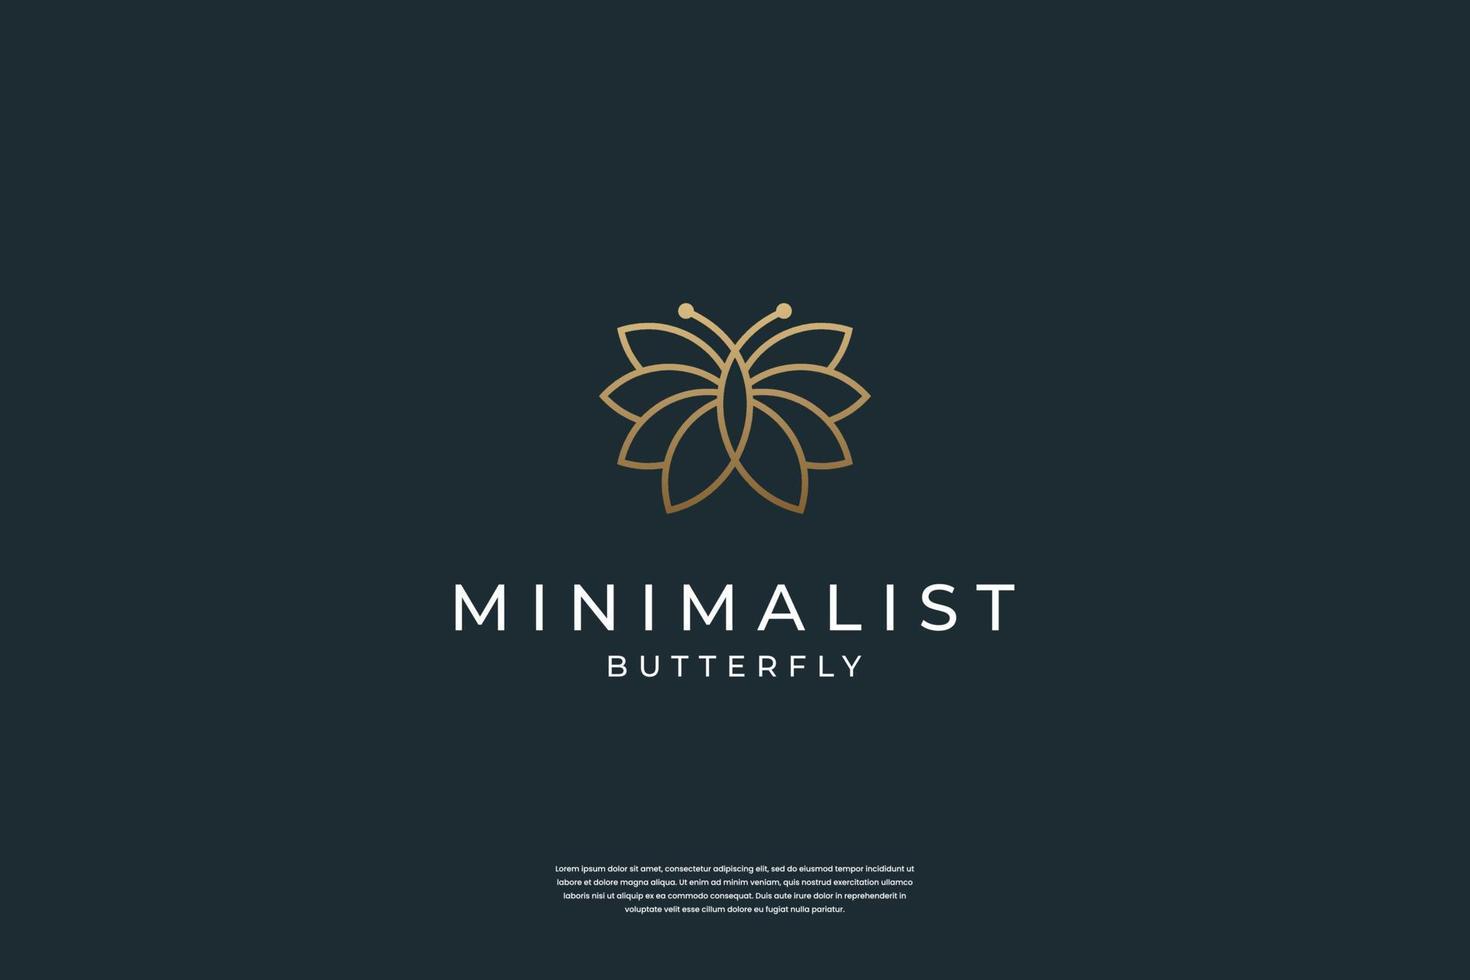 Minimalist elegant Butterfly logo design with line art style vector